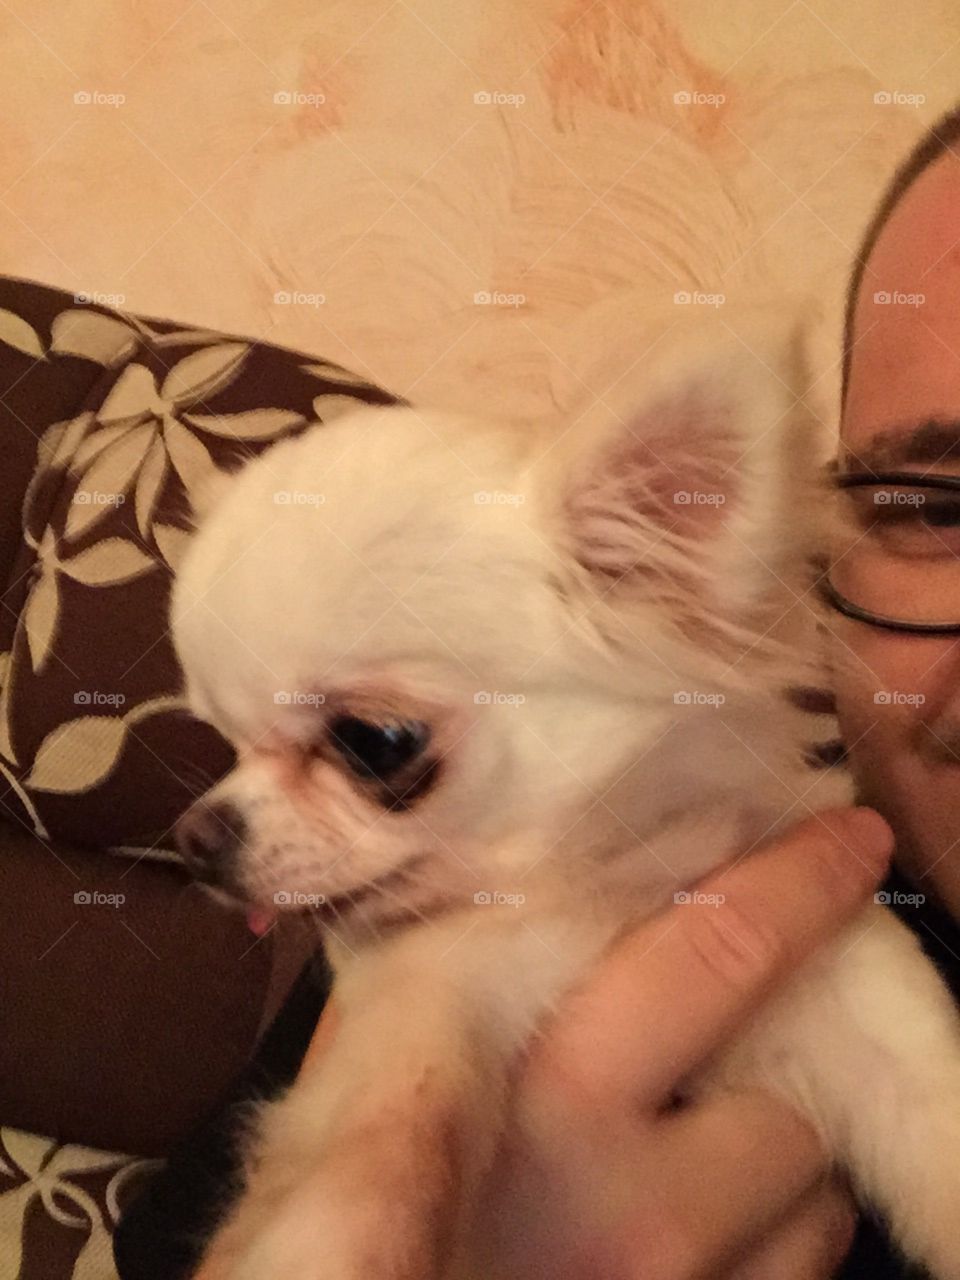 My friend's Chihuahua. Nice pet. 